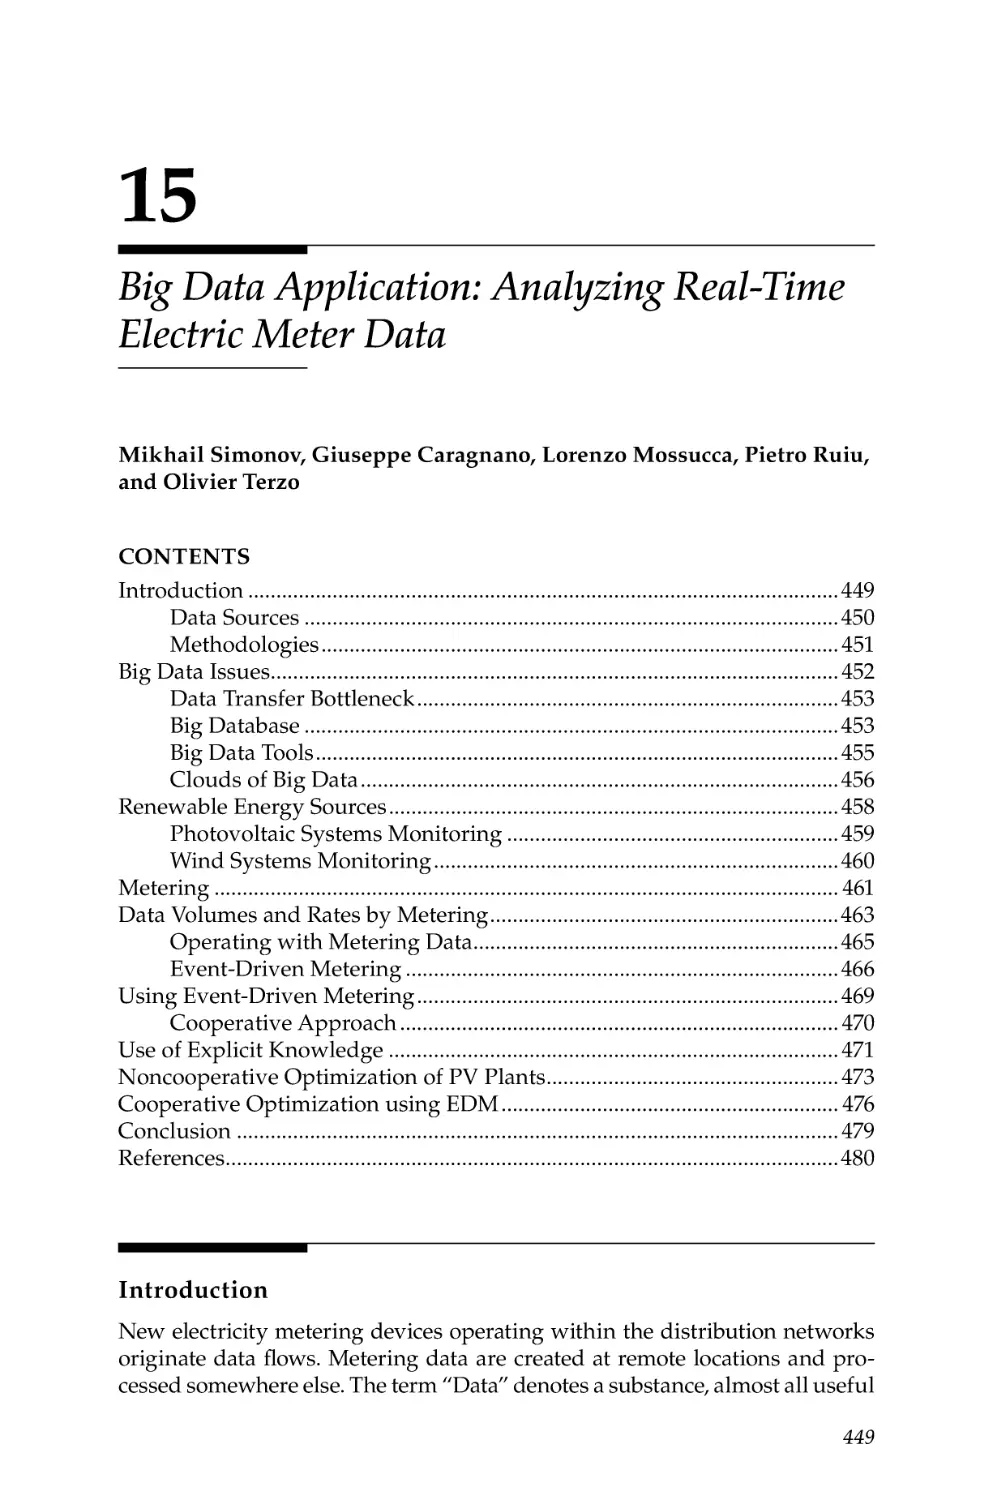 15. Big Data Application